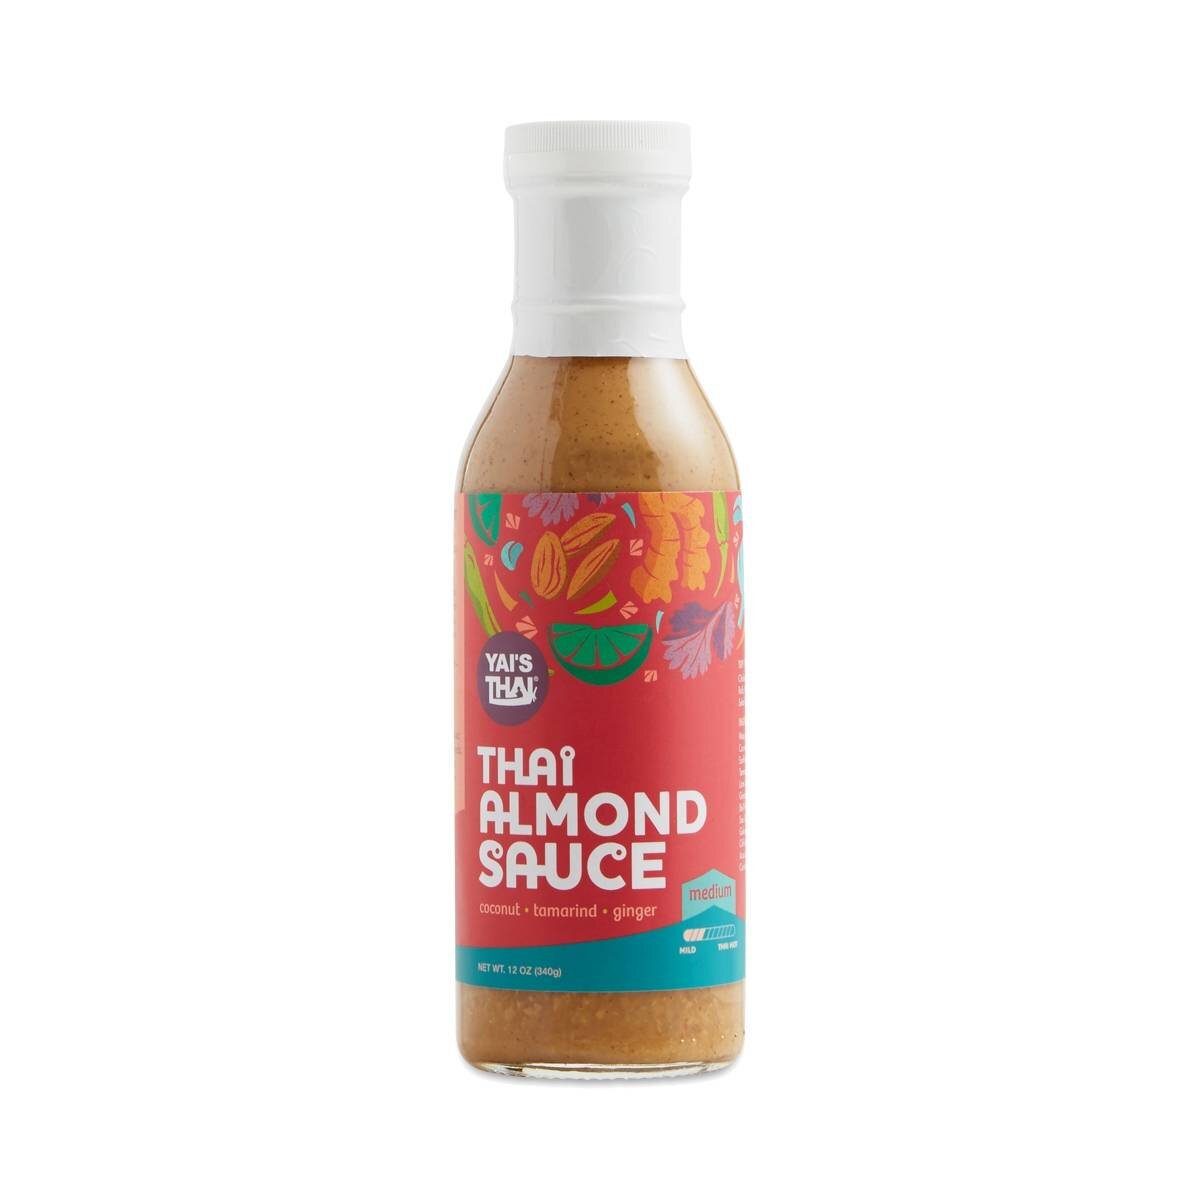 Almond Sauce